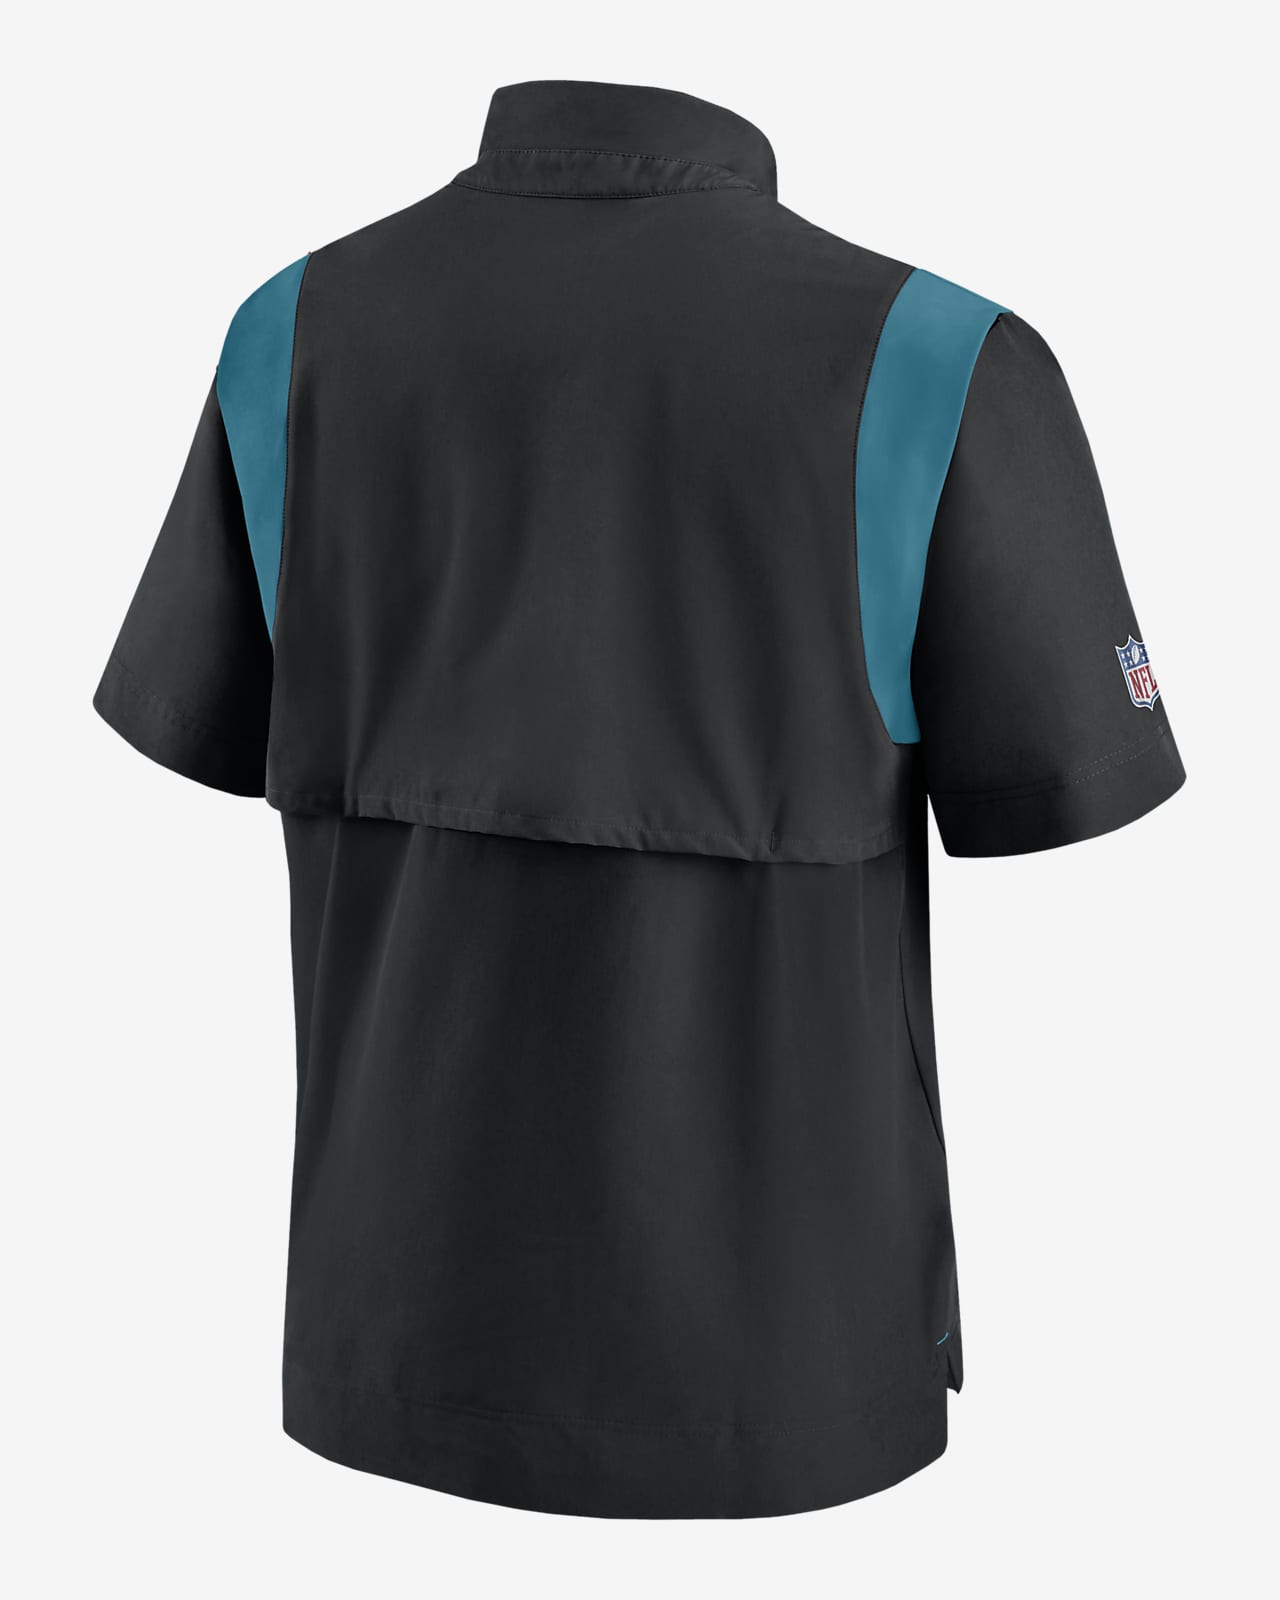 Sideline Coach Lockup Jacksonville Jaguars) Men's Short-Sleeve Jacket. Nike.com